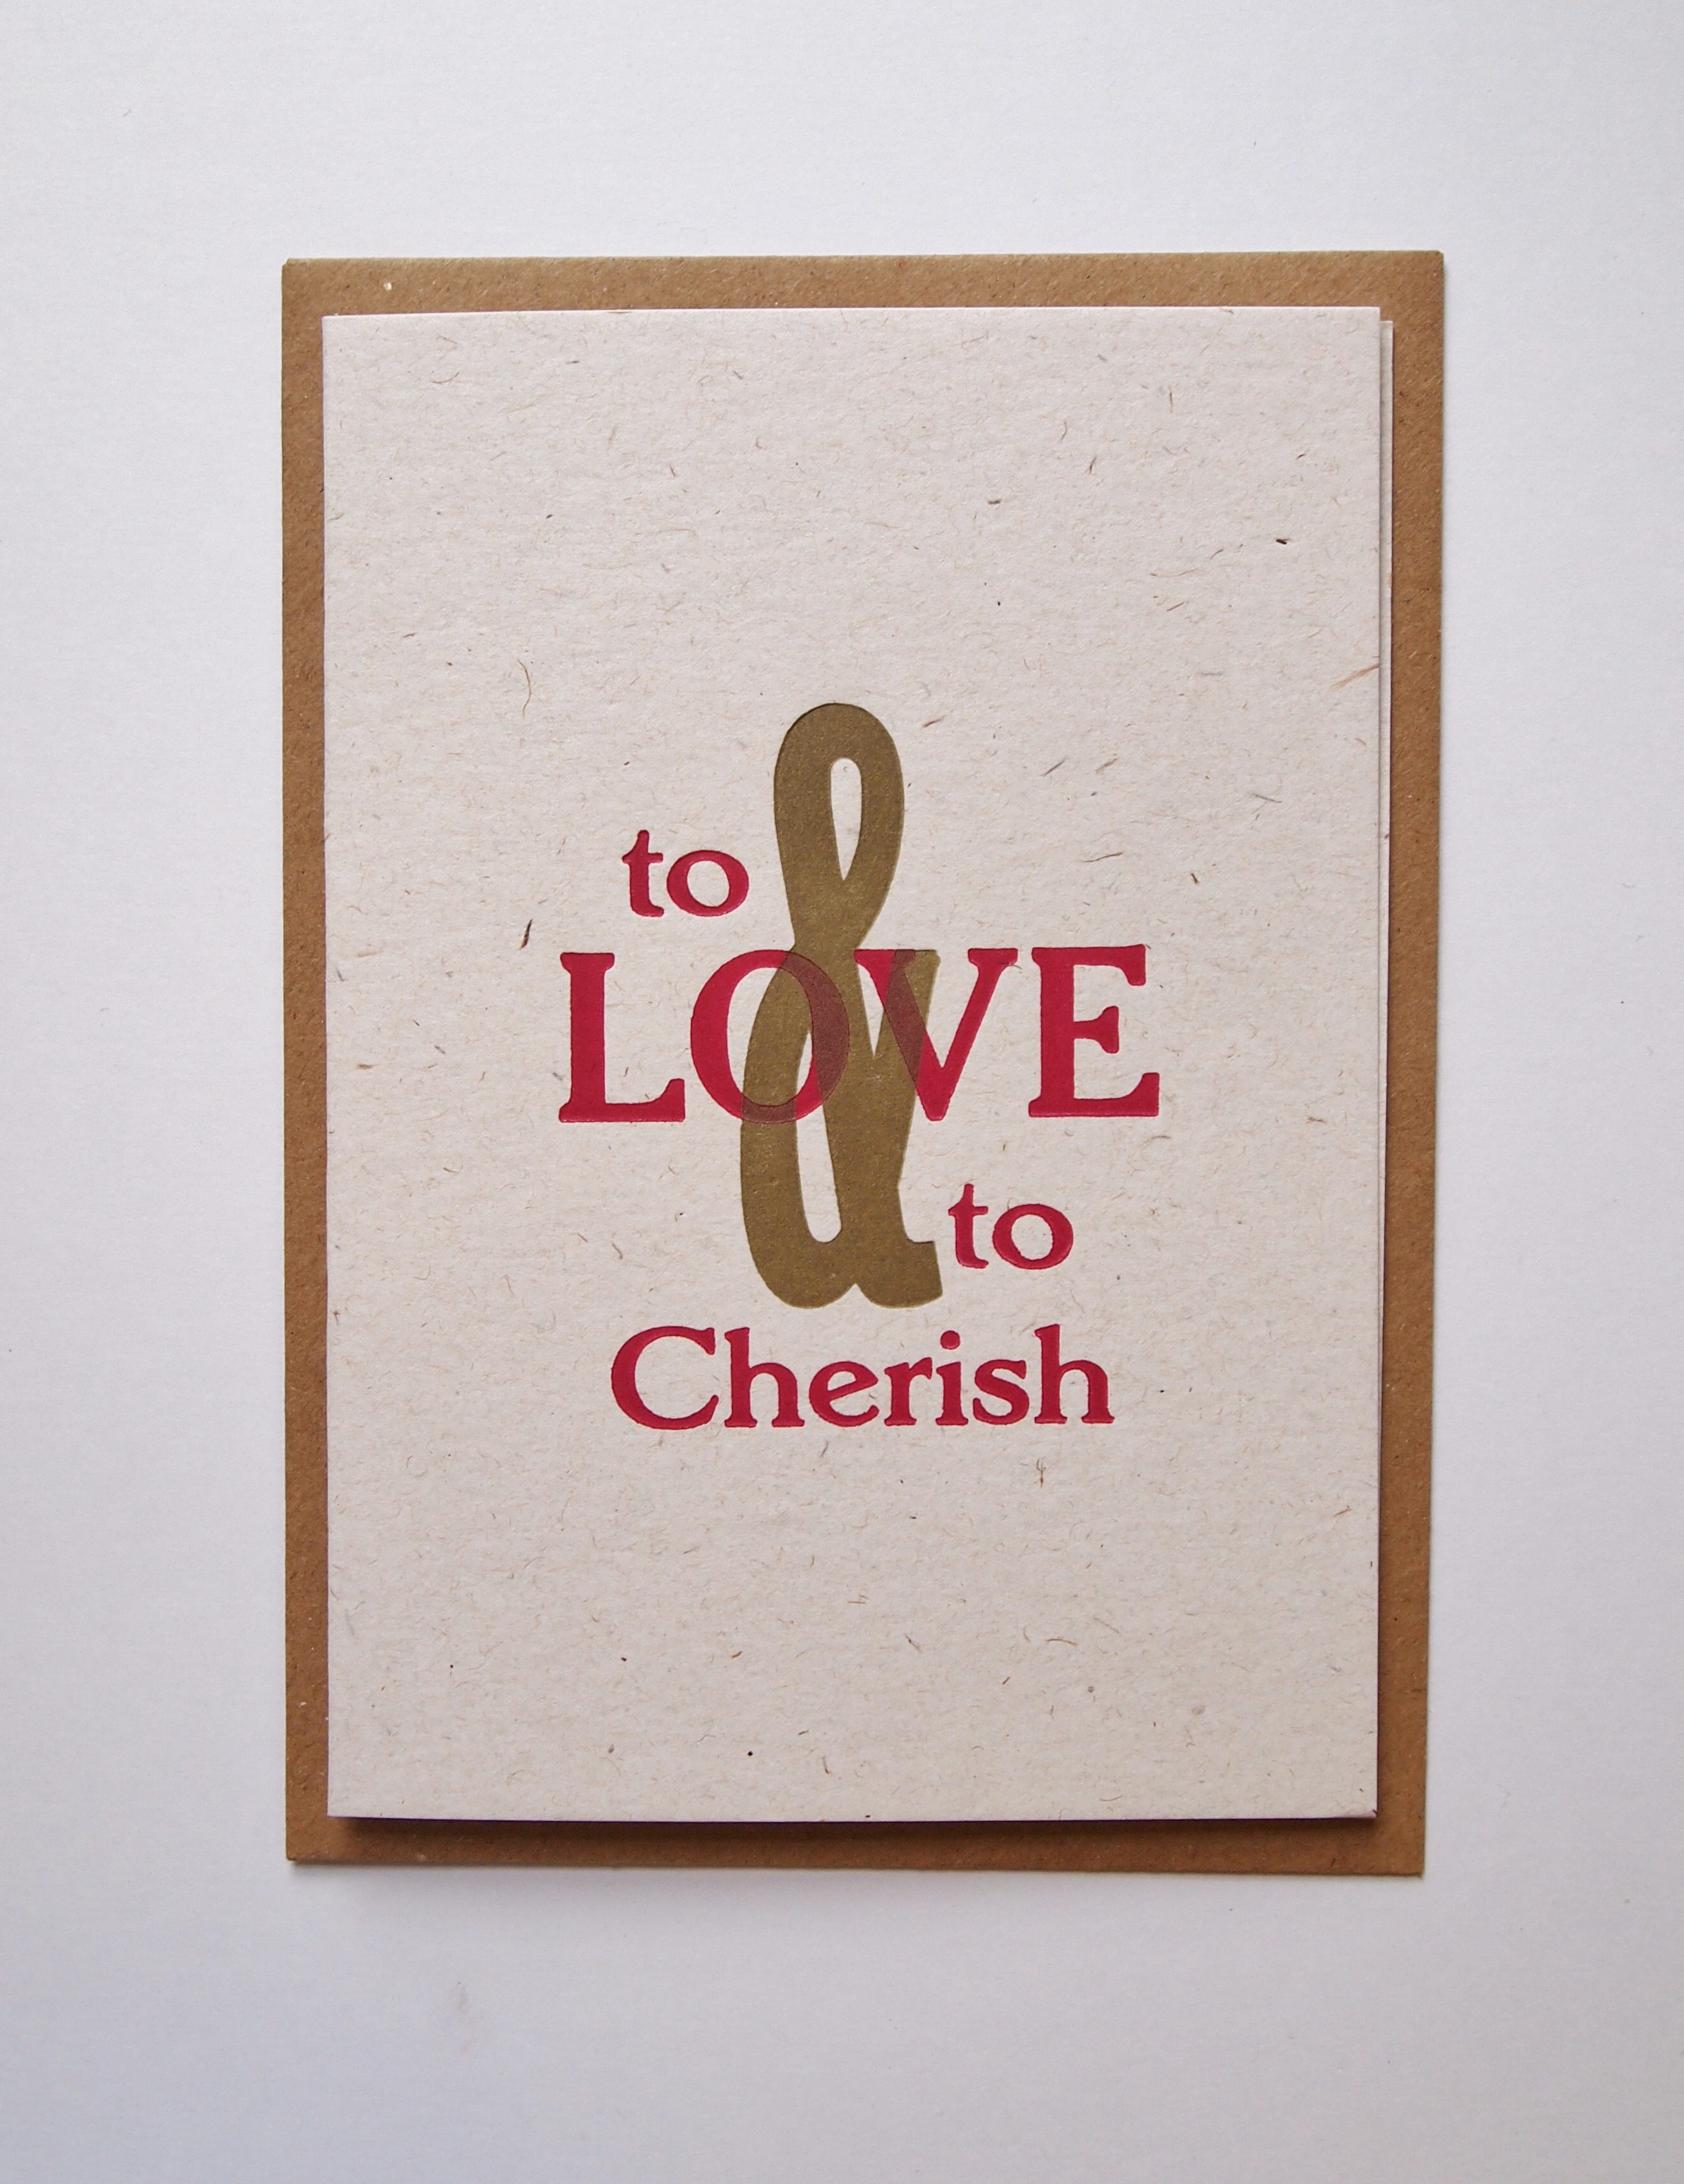 To Love and Cherish card